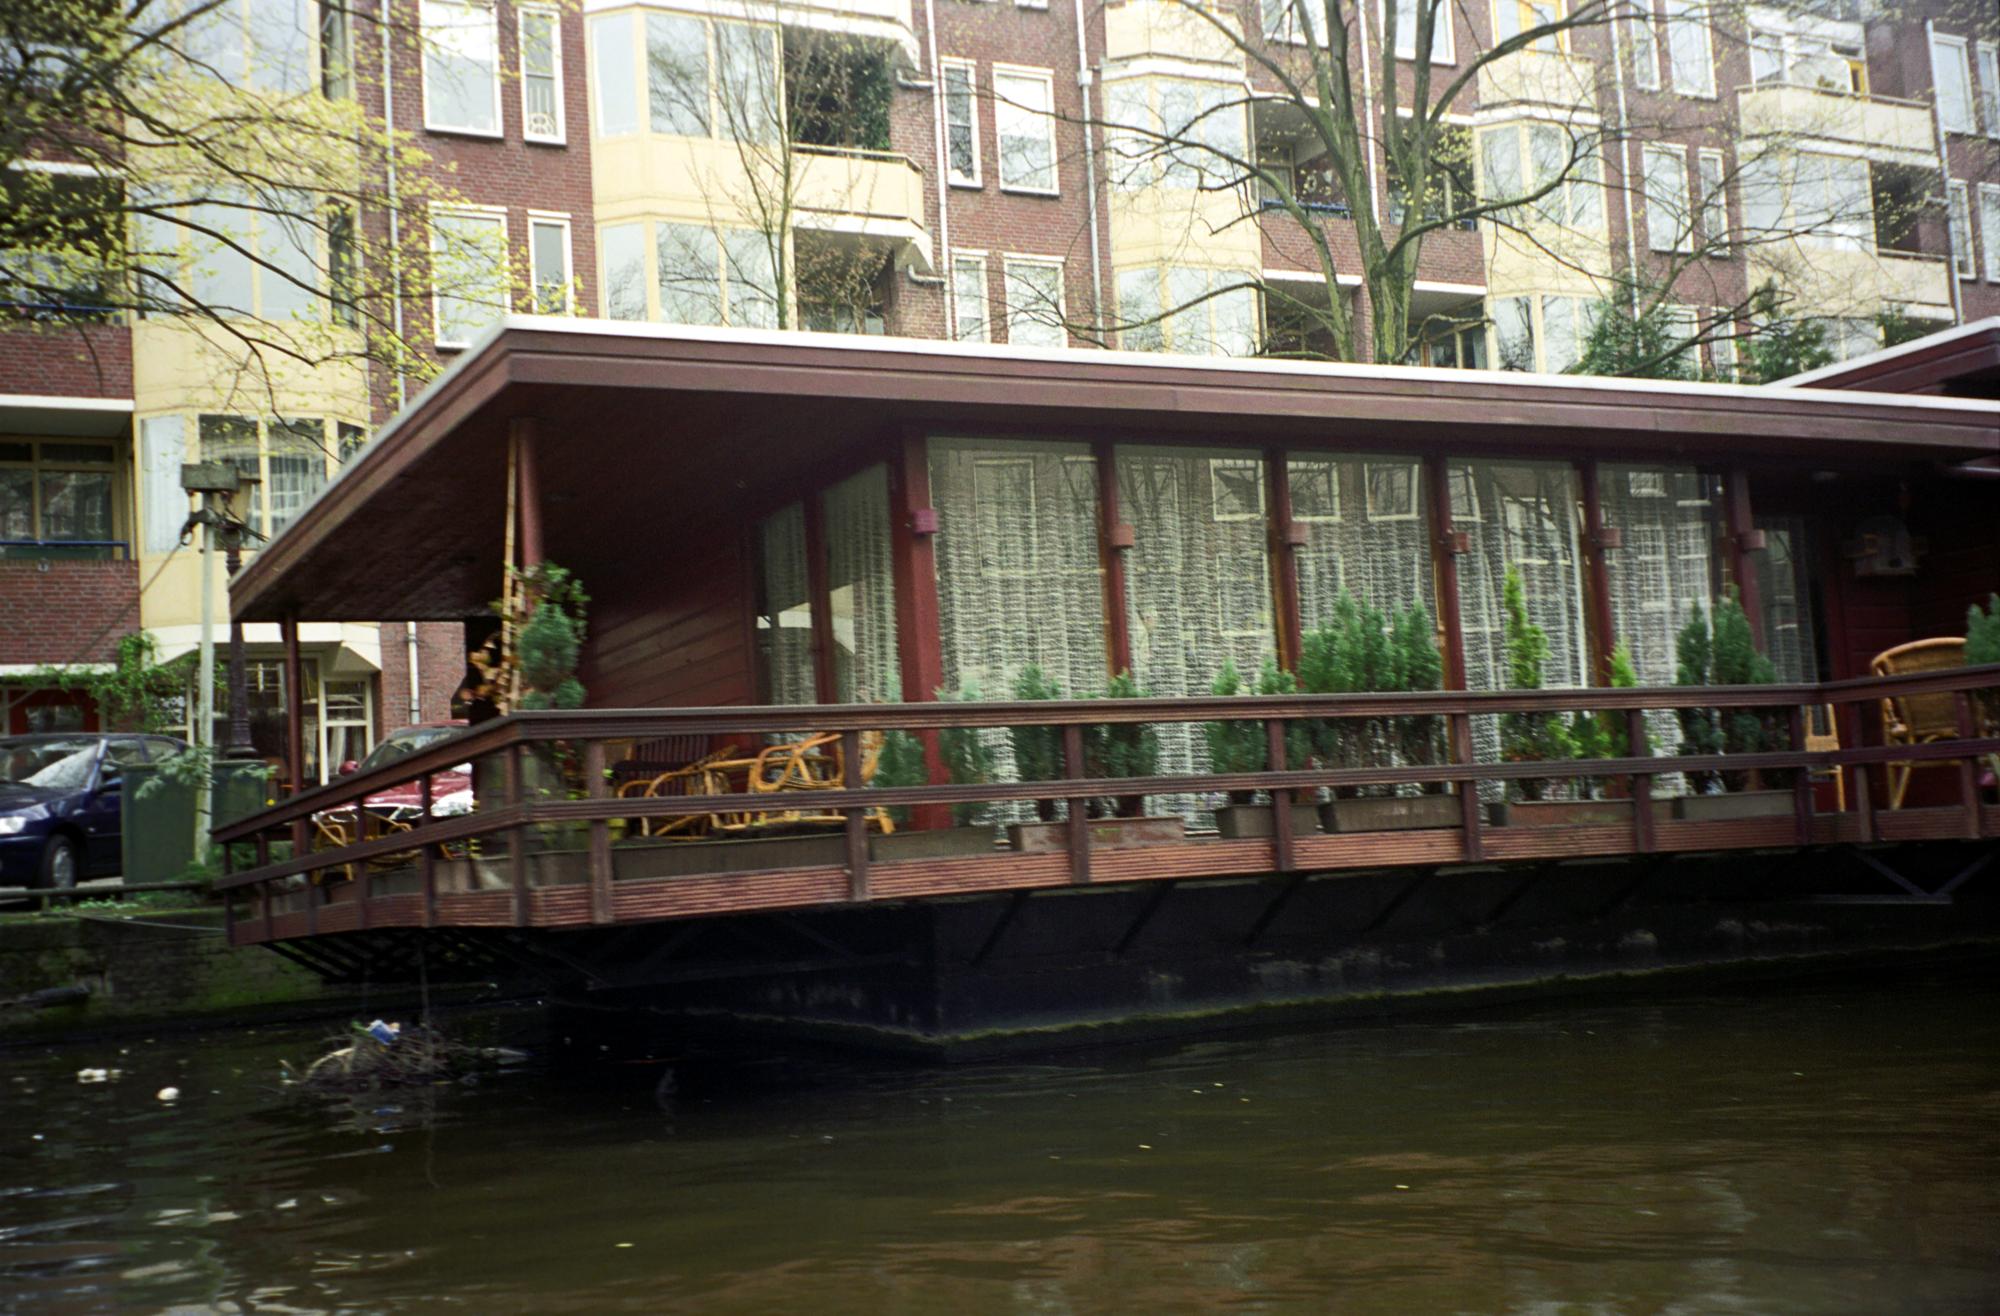 The Netherlands - Houseboat Amsterdam #3